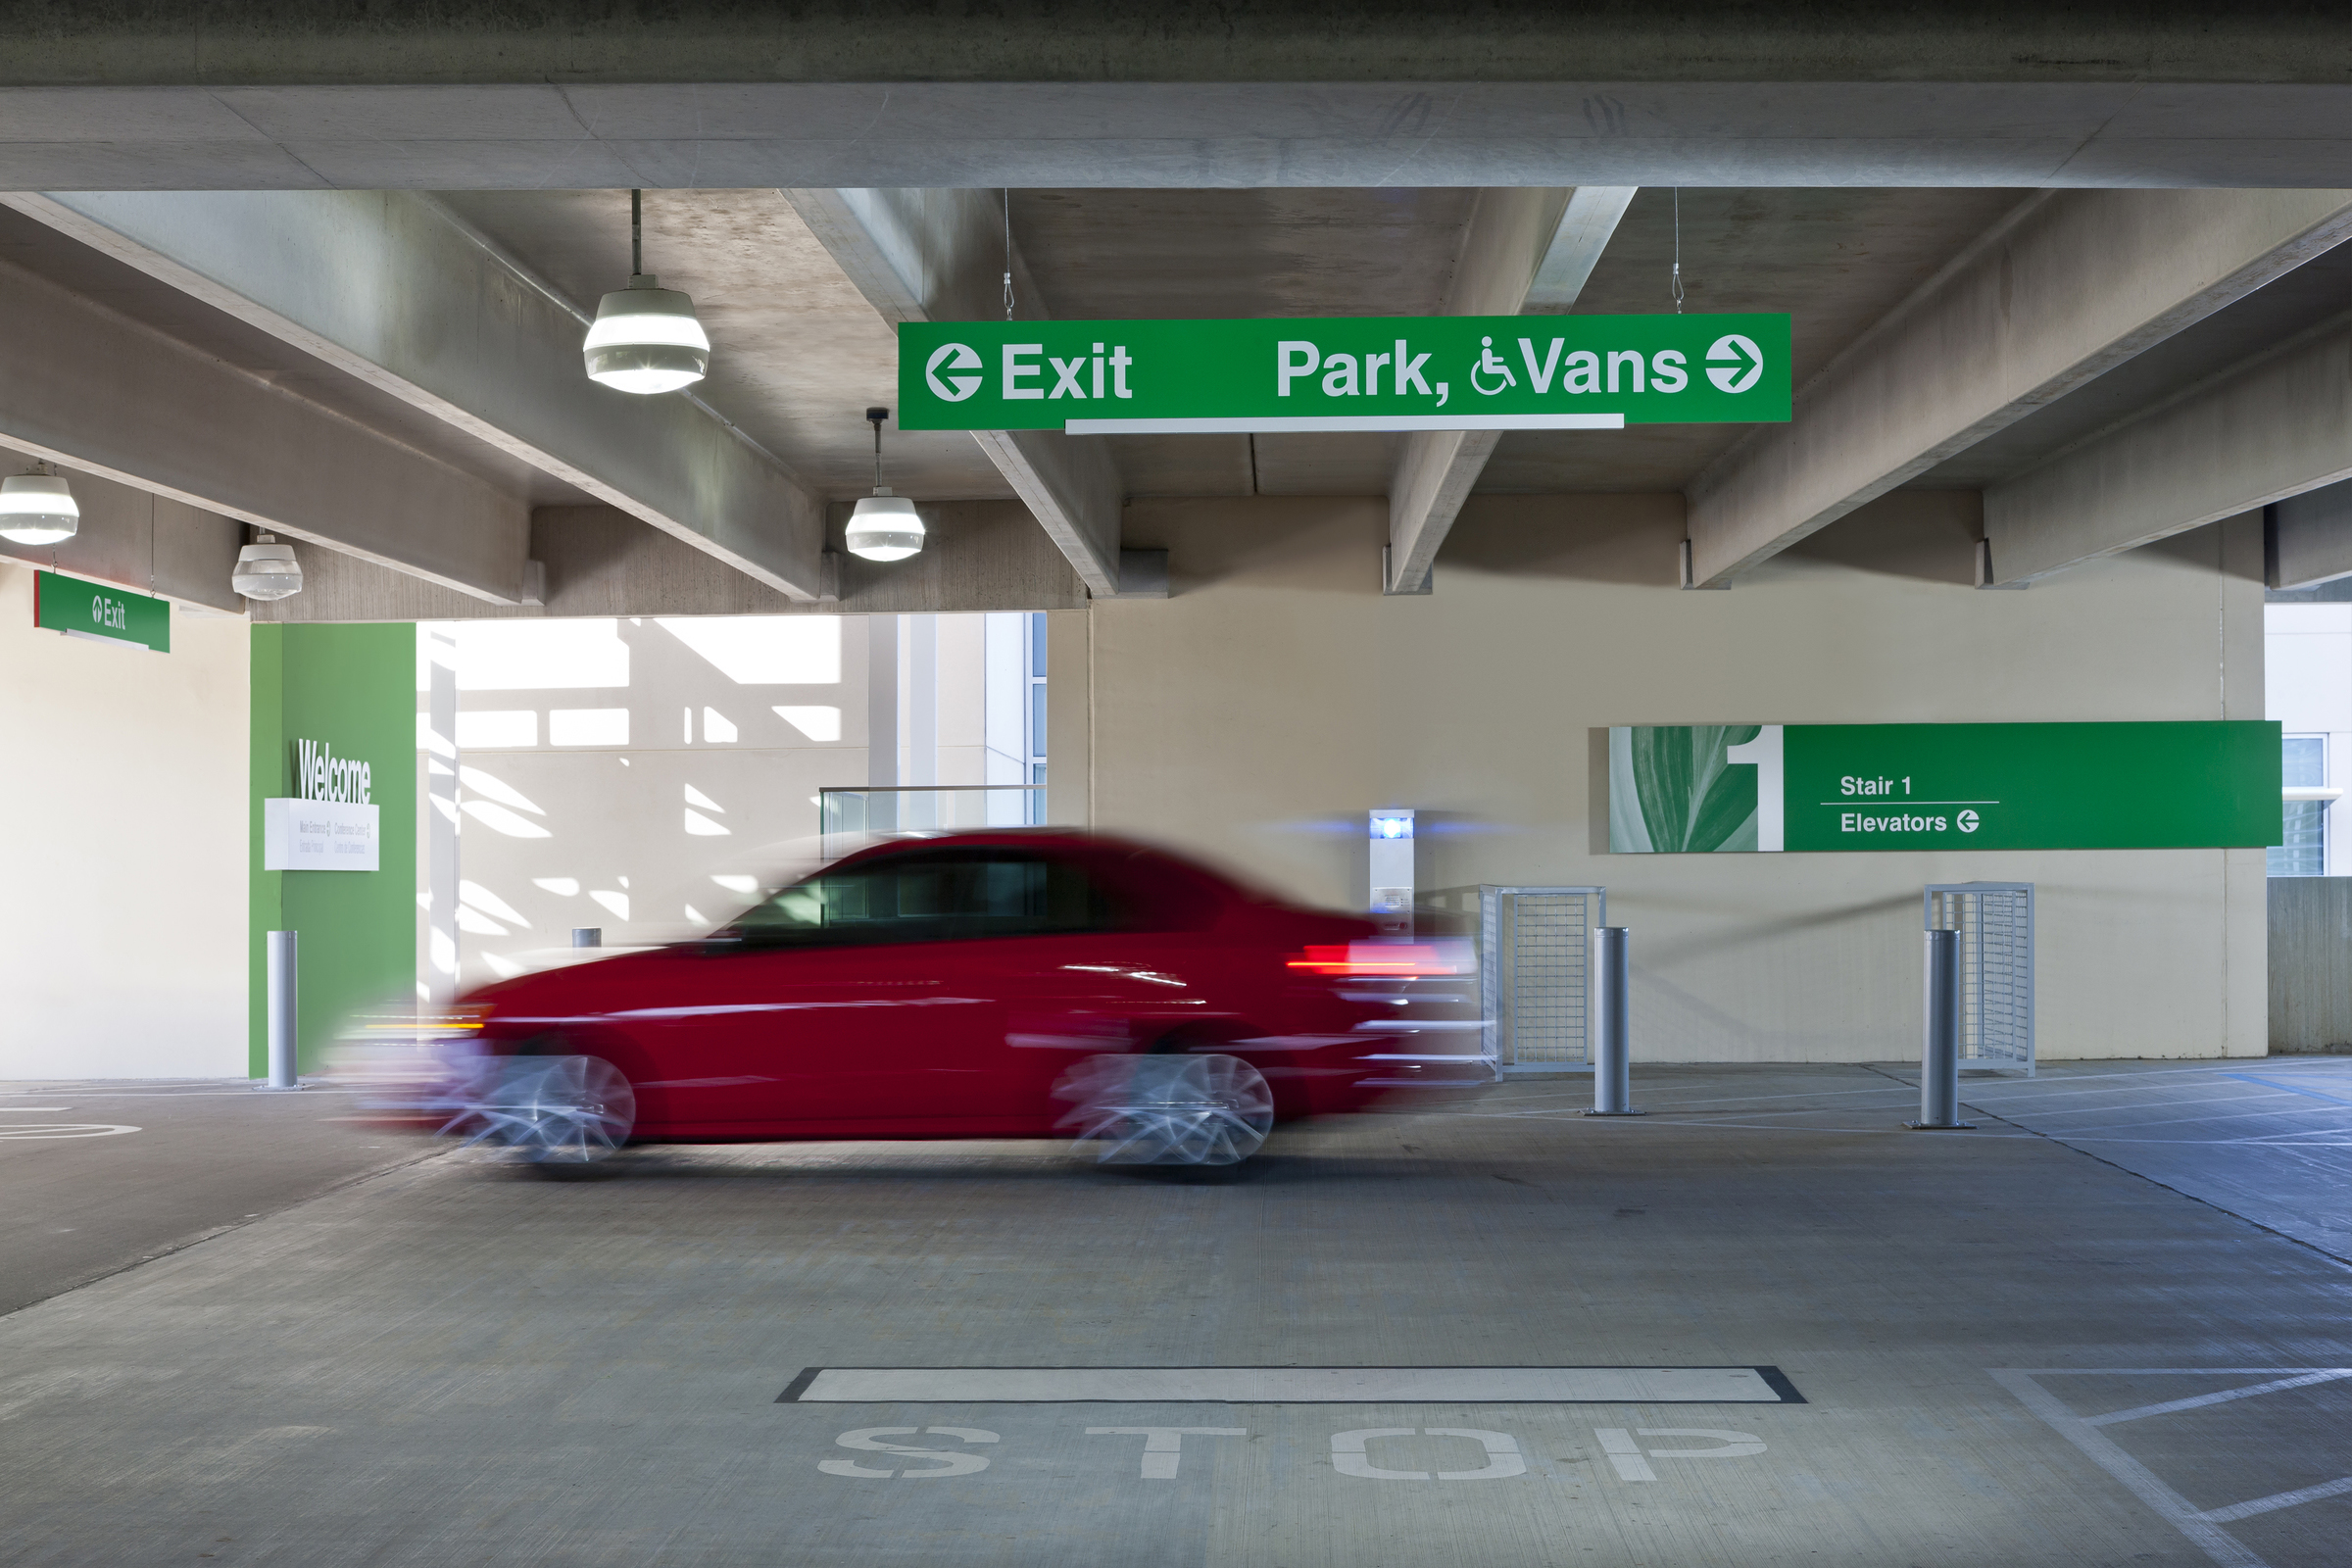 Parking garage level 1 signs